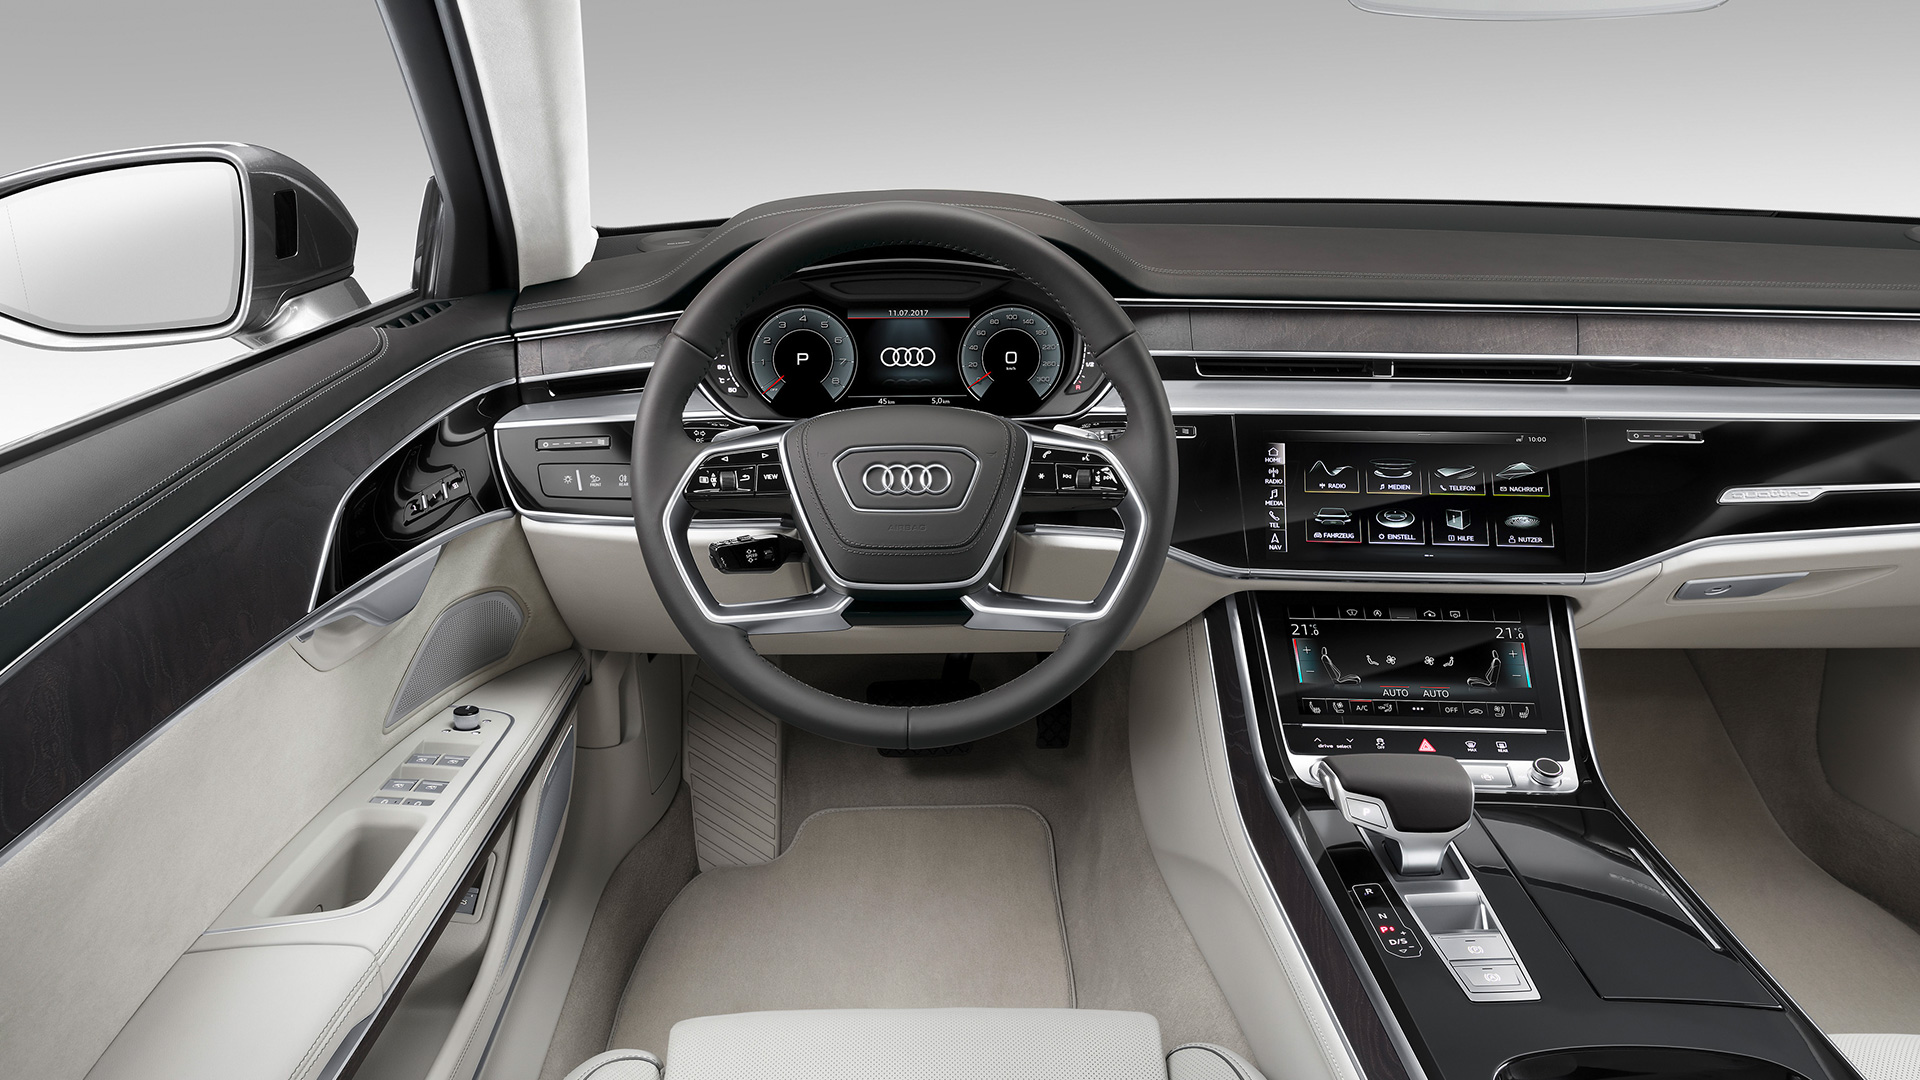 Audi A8l 2020 55 TFSI quattro Interior Car Photos - Overdrive